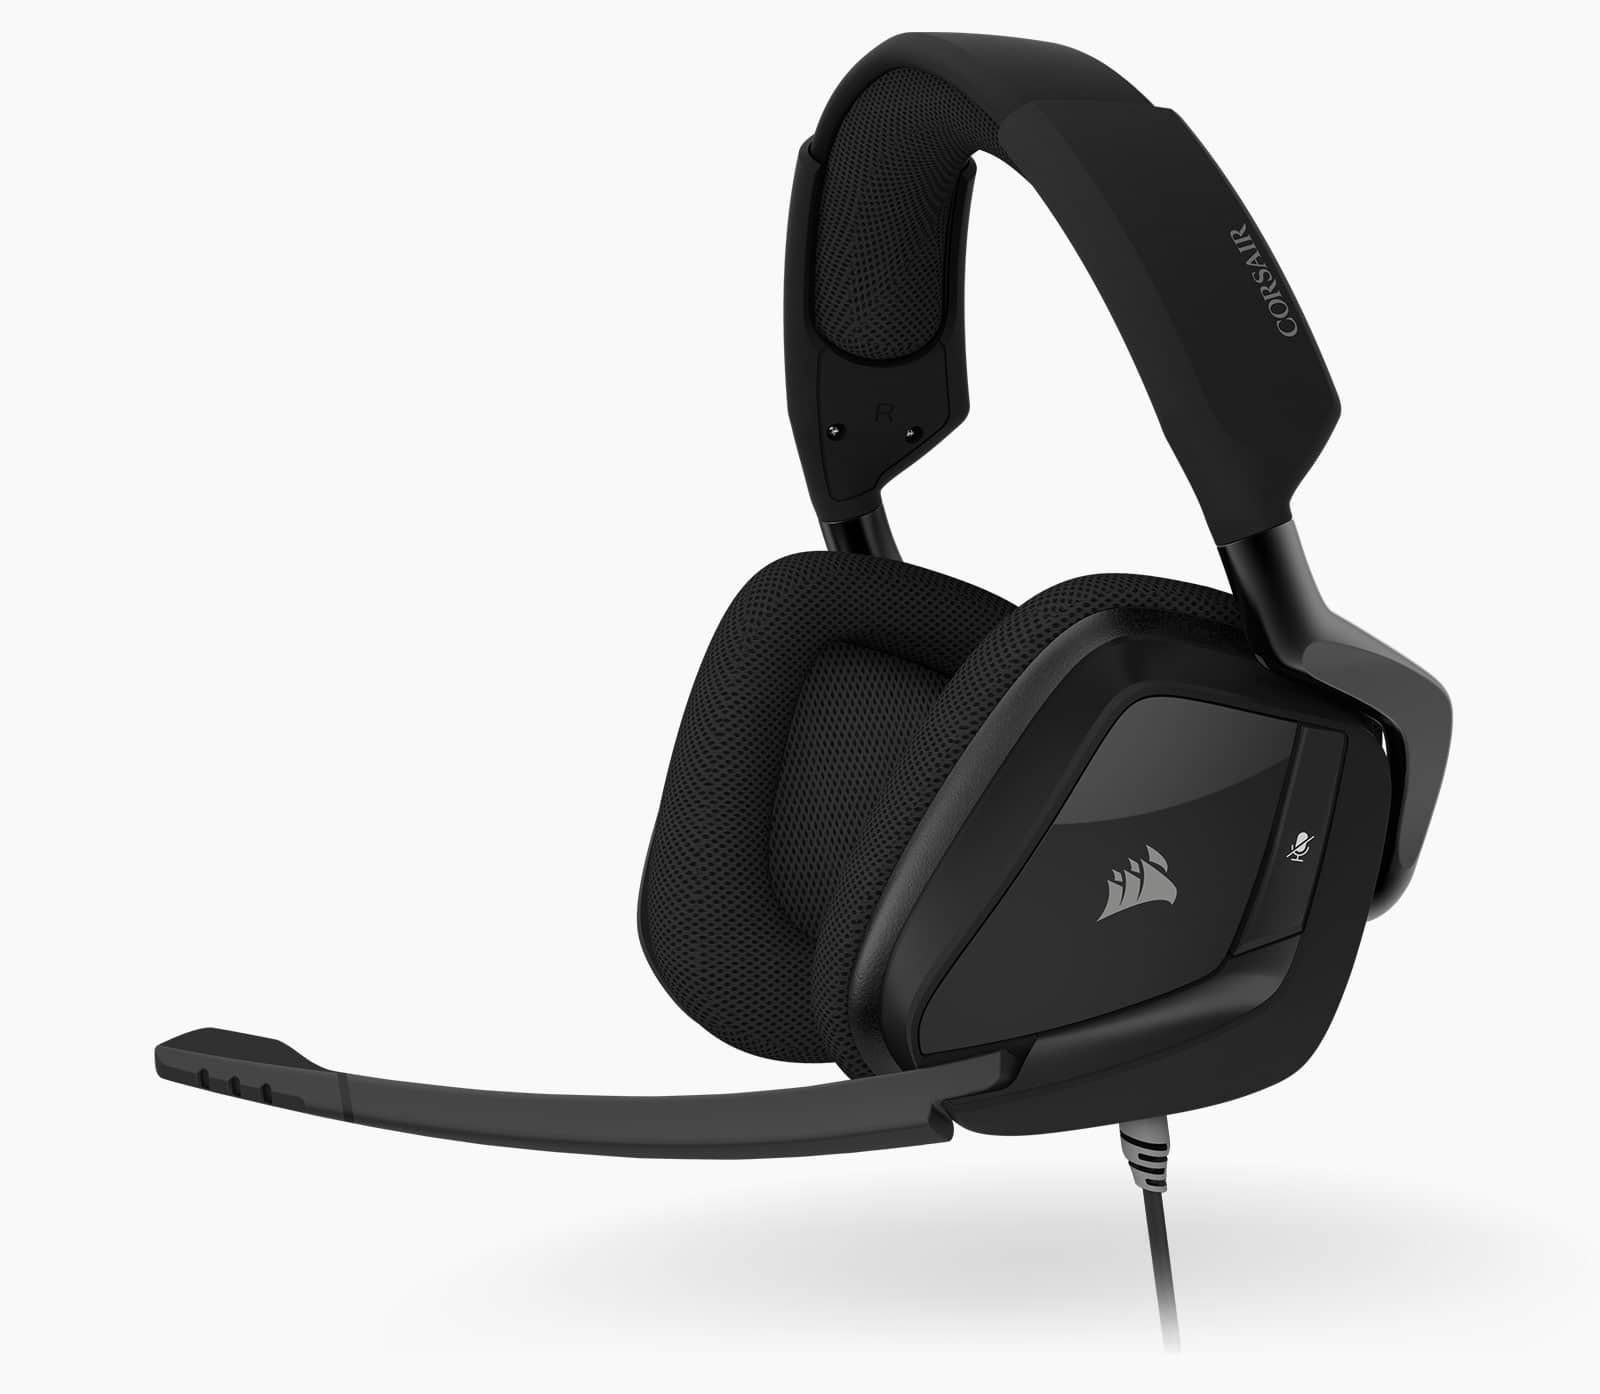 Theseus matchmaker sommer VOID ELITE SURROUND Premium Gaming Headset with 7.1 Surround Sound — Carbon